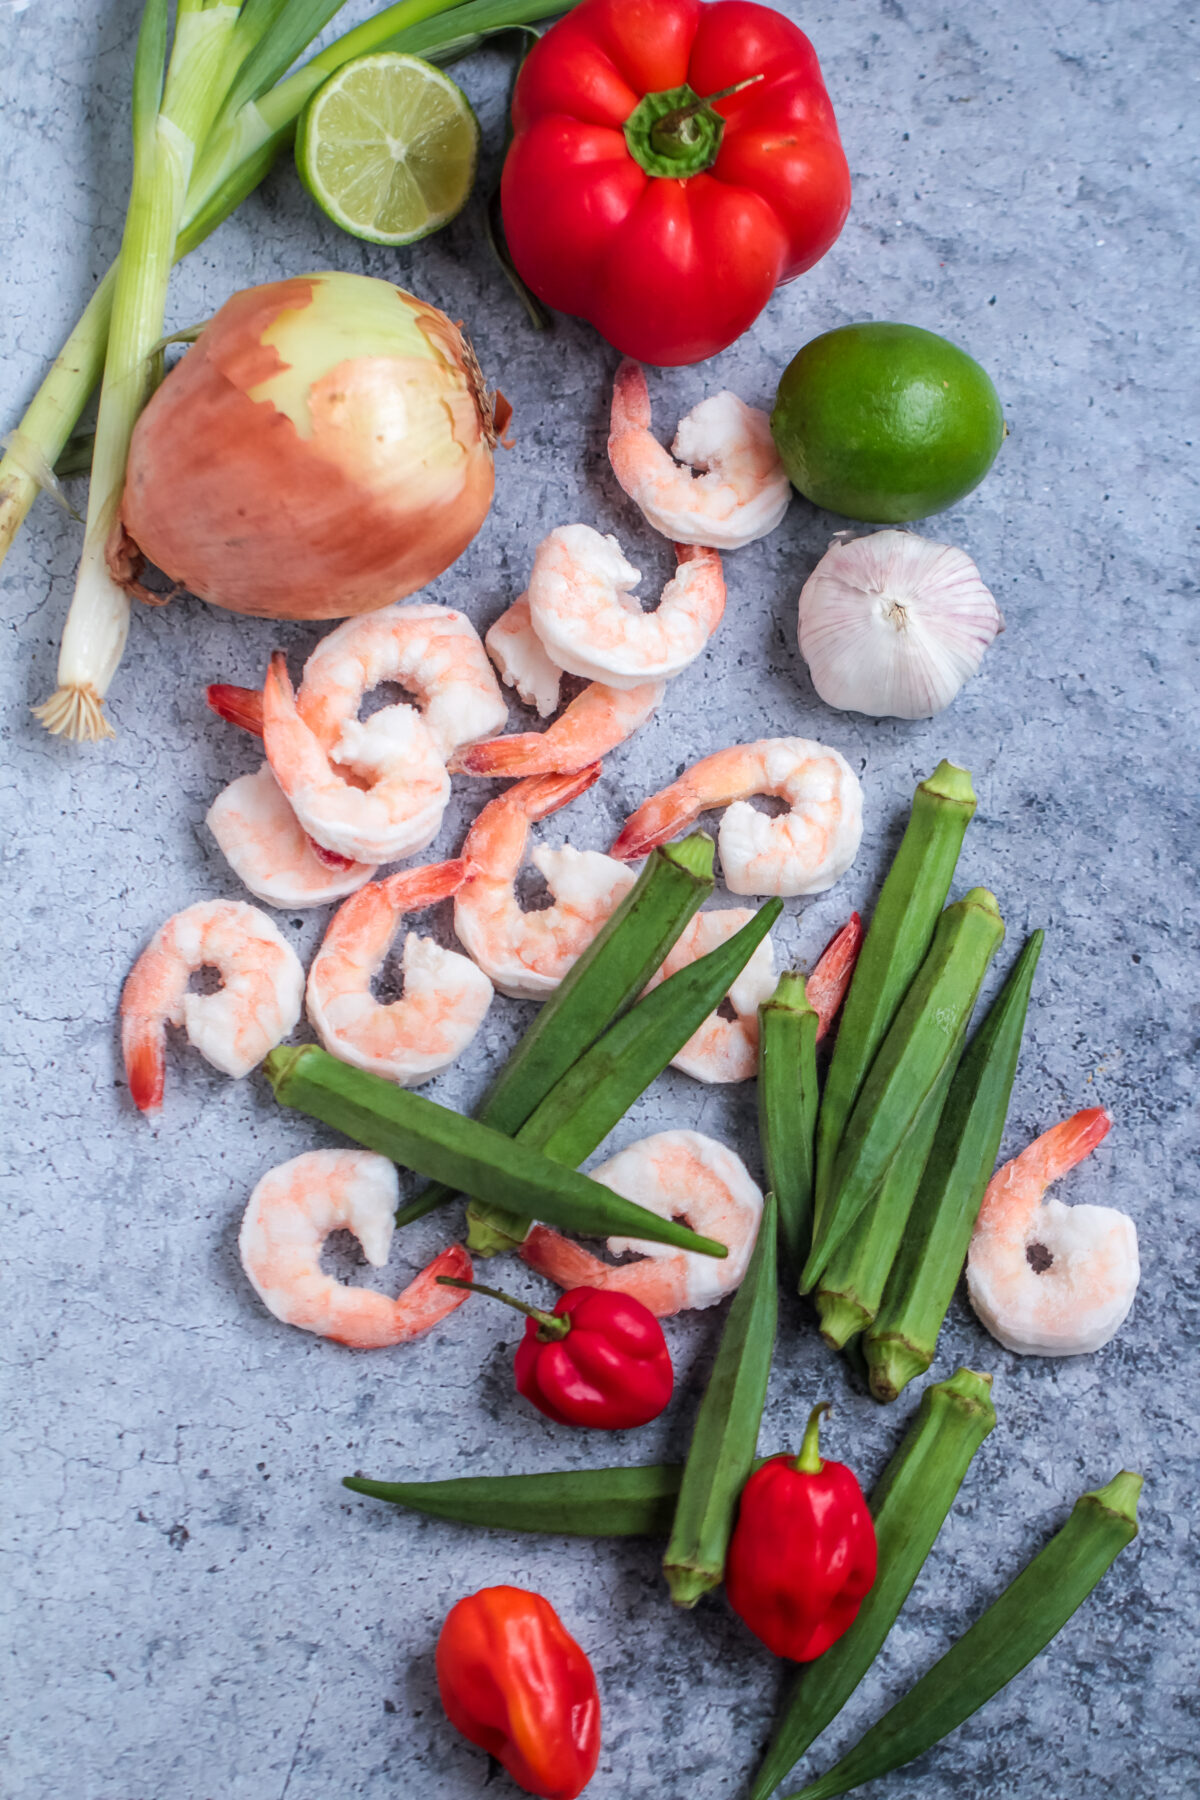 Ingredients for okra and shrimp